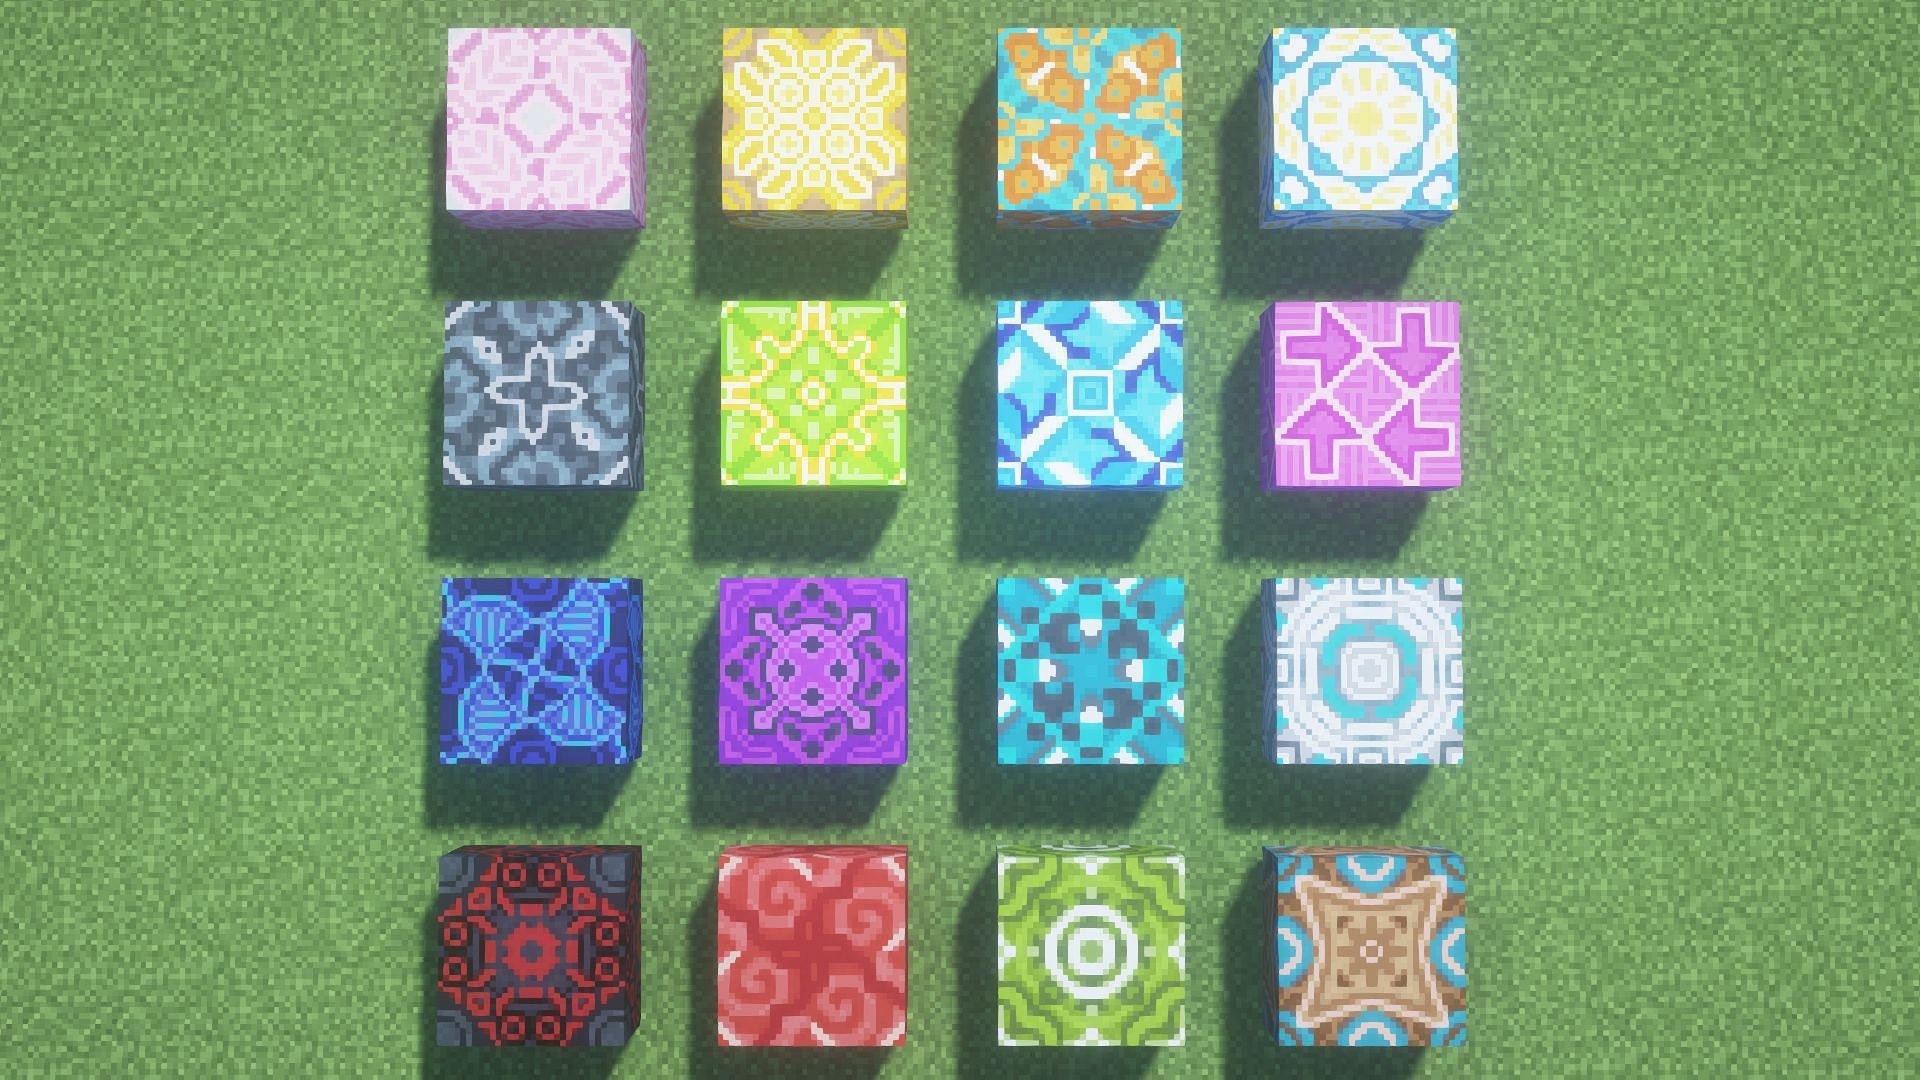 All types of glazed terracotta blocks (Image via Minecraft)